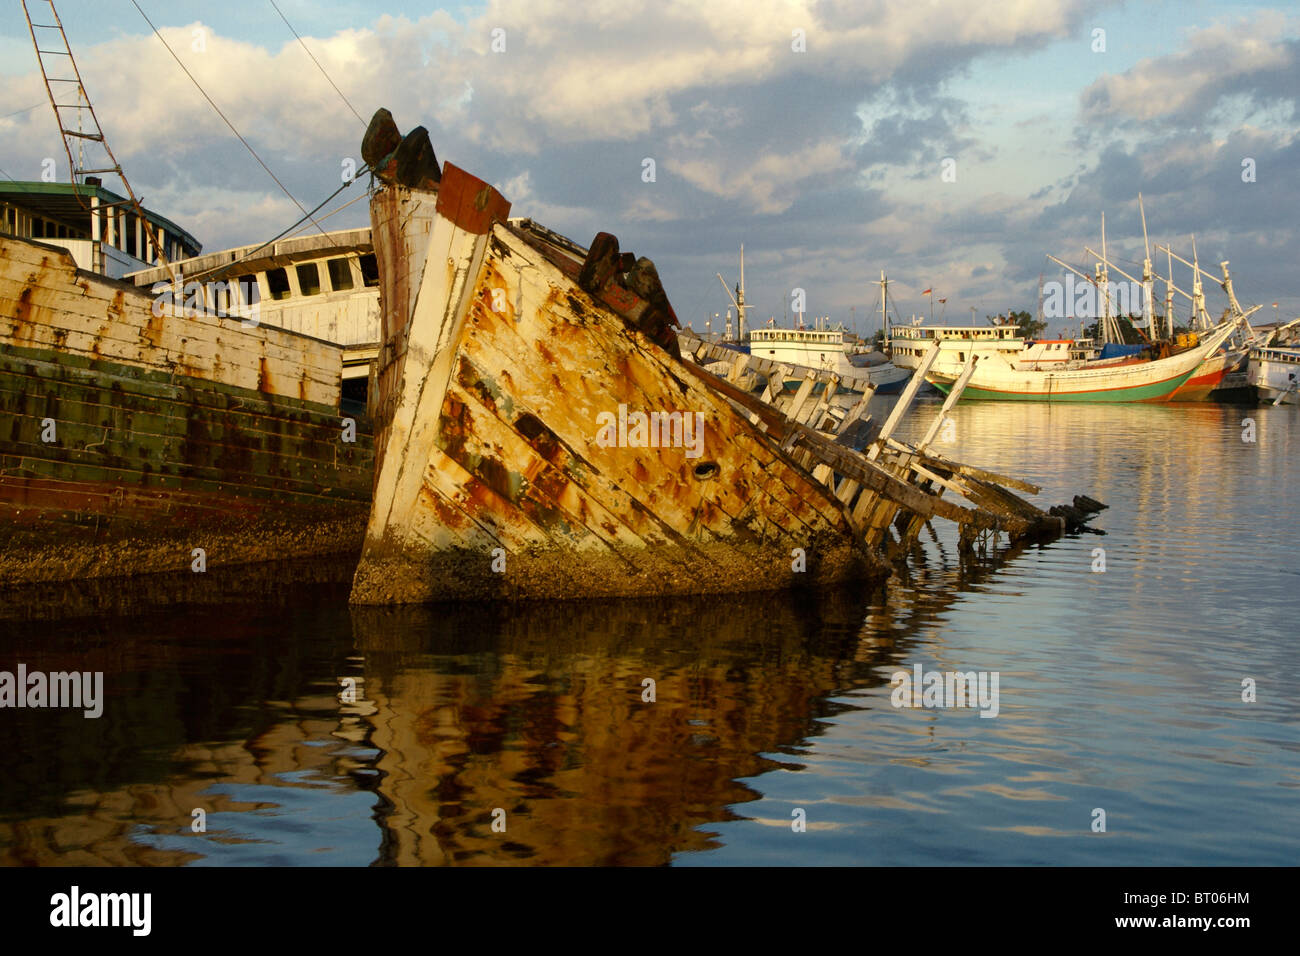 Paotere Hafen, Makassar, Süd-Sulawesi, Indonesien Stockfoto